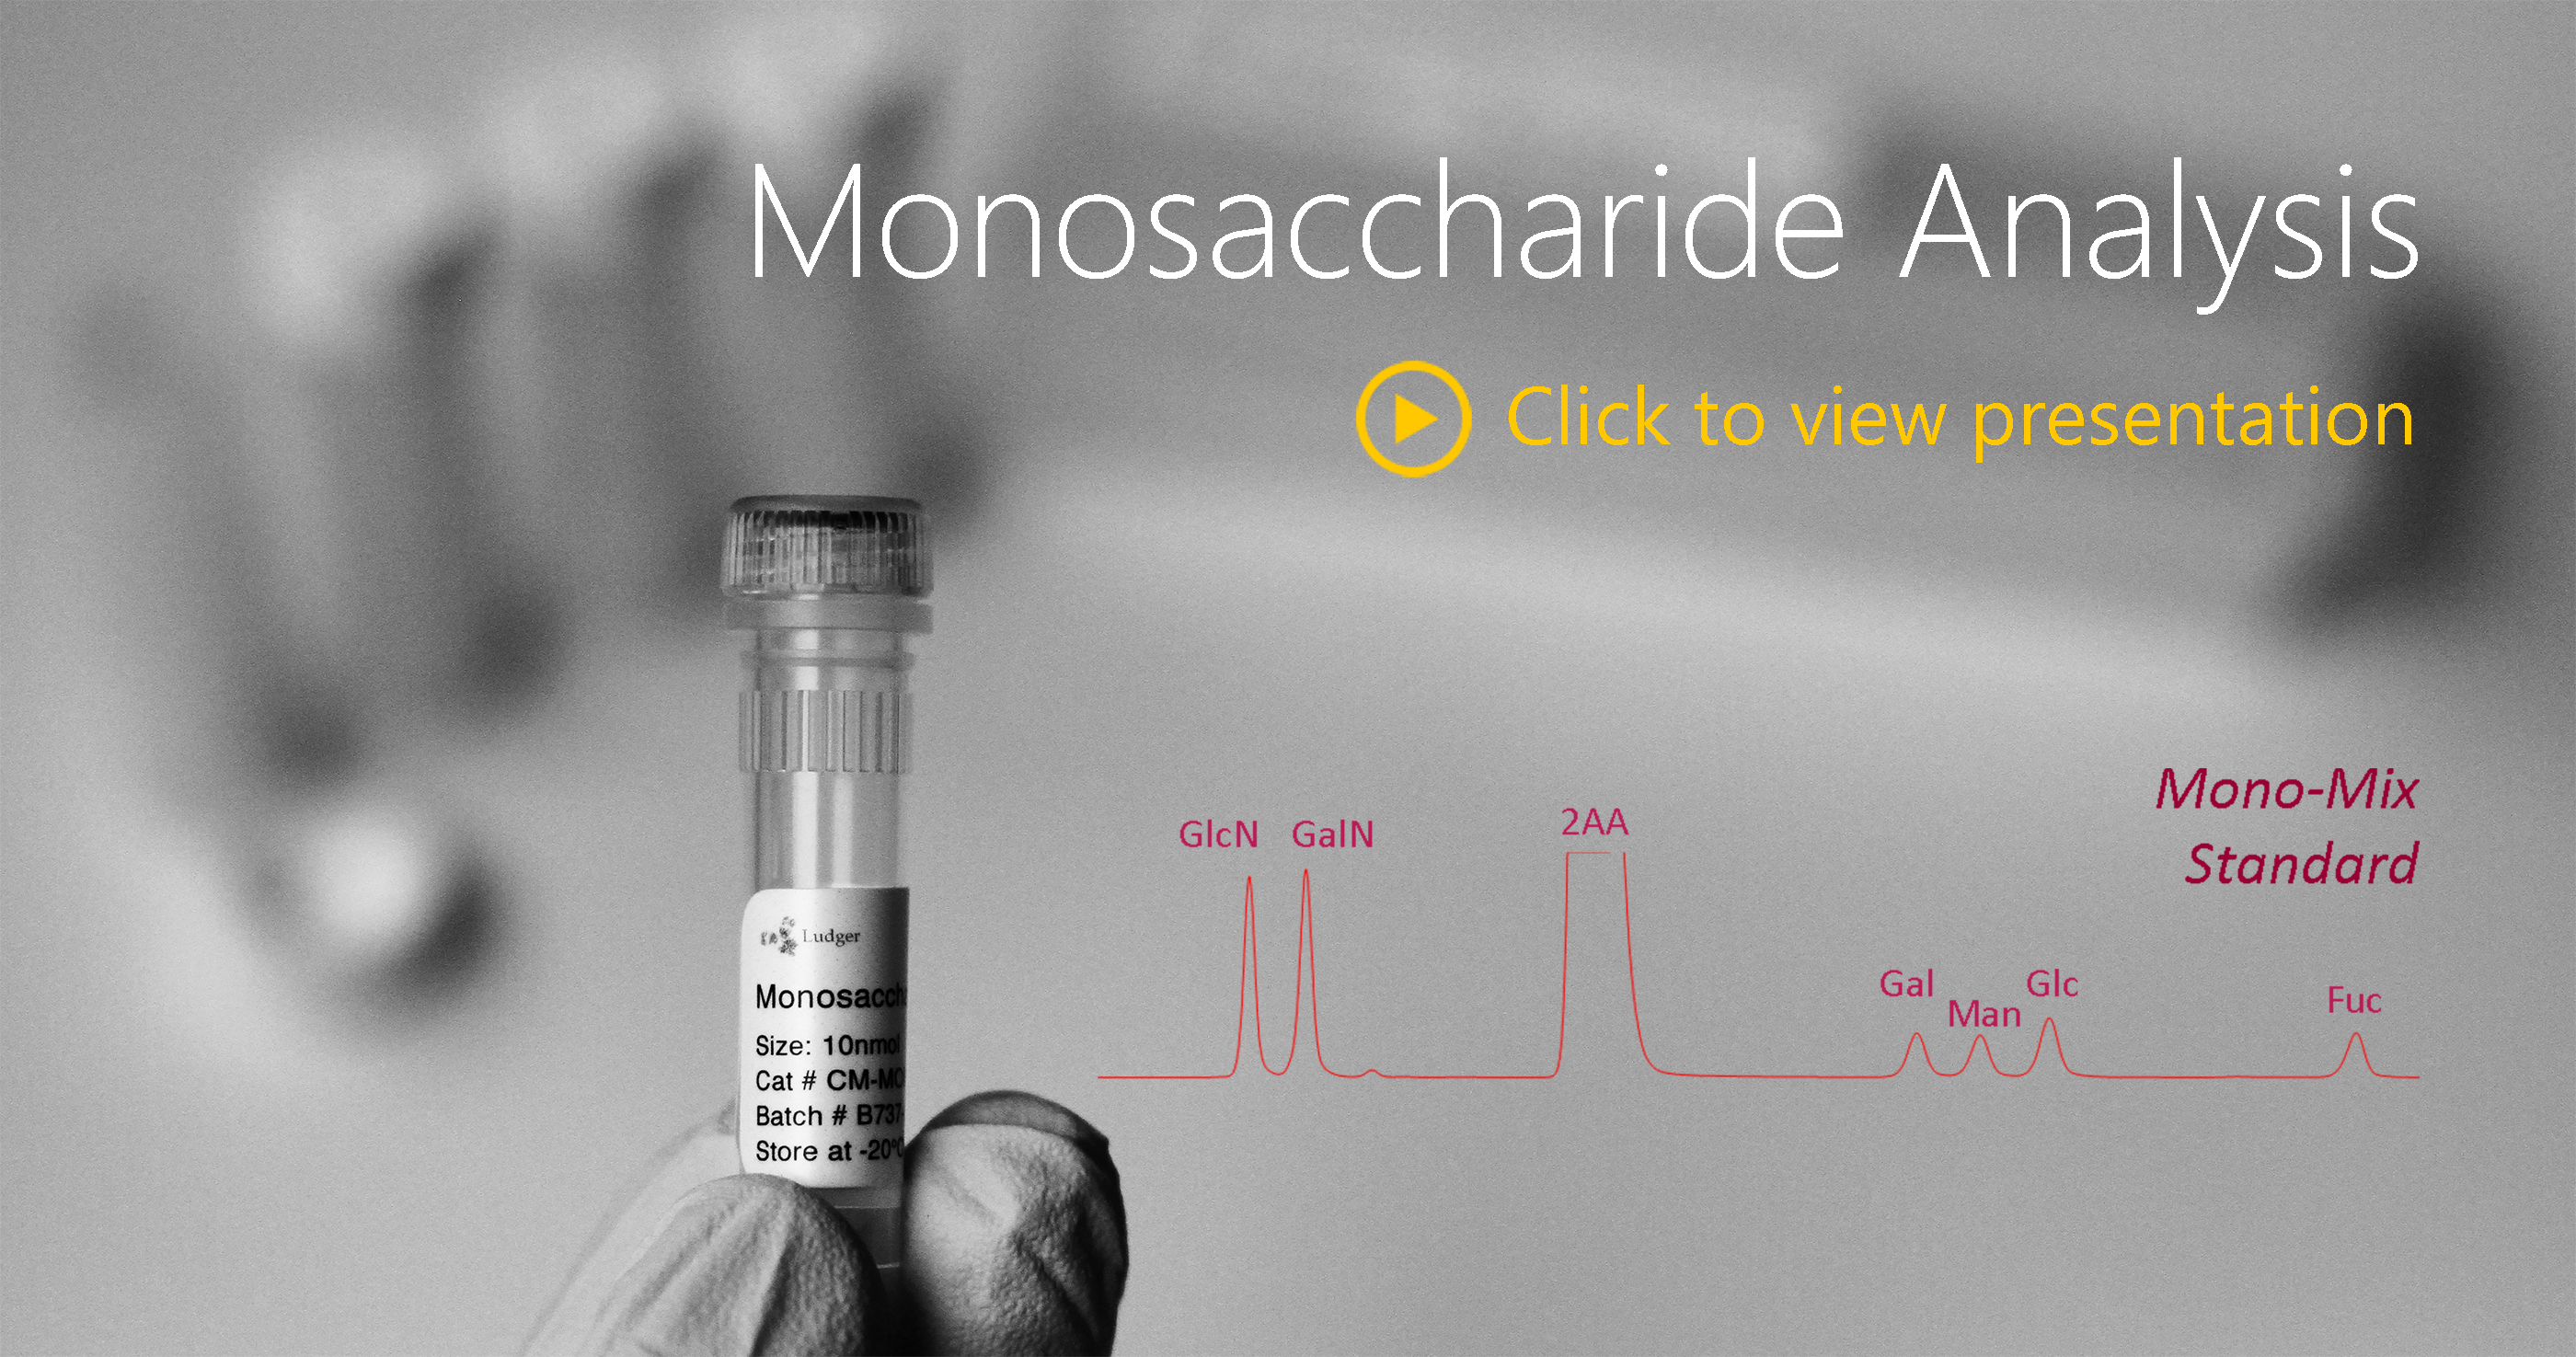 Ludger Monosaccharide Analysis Presentation